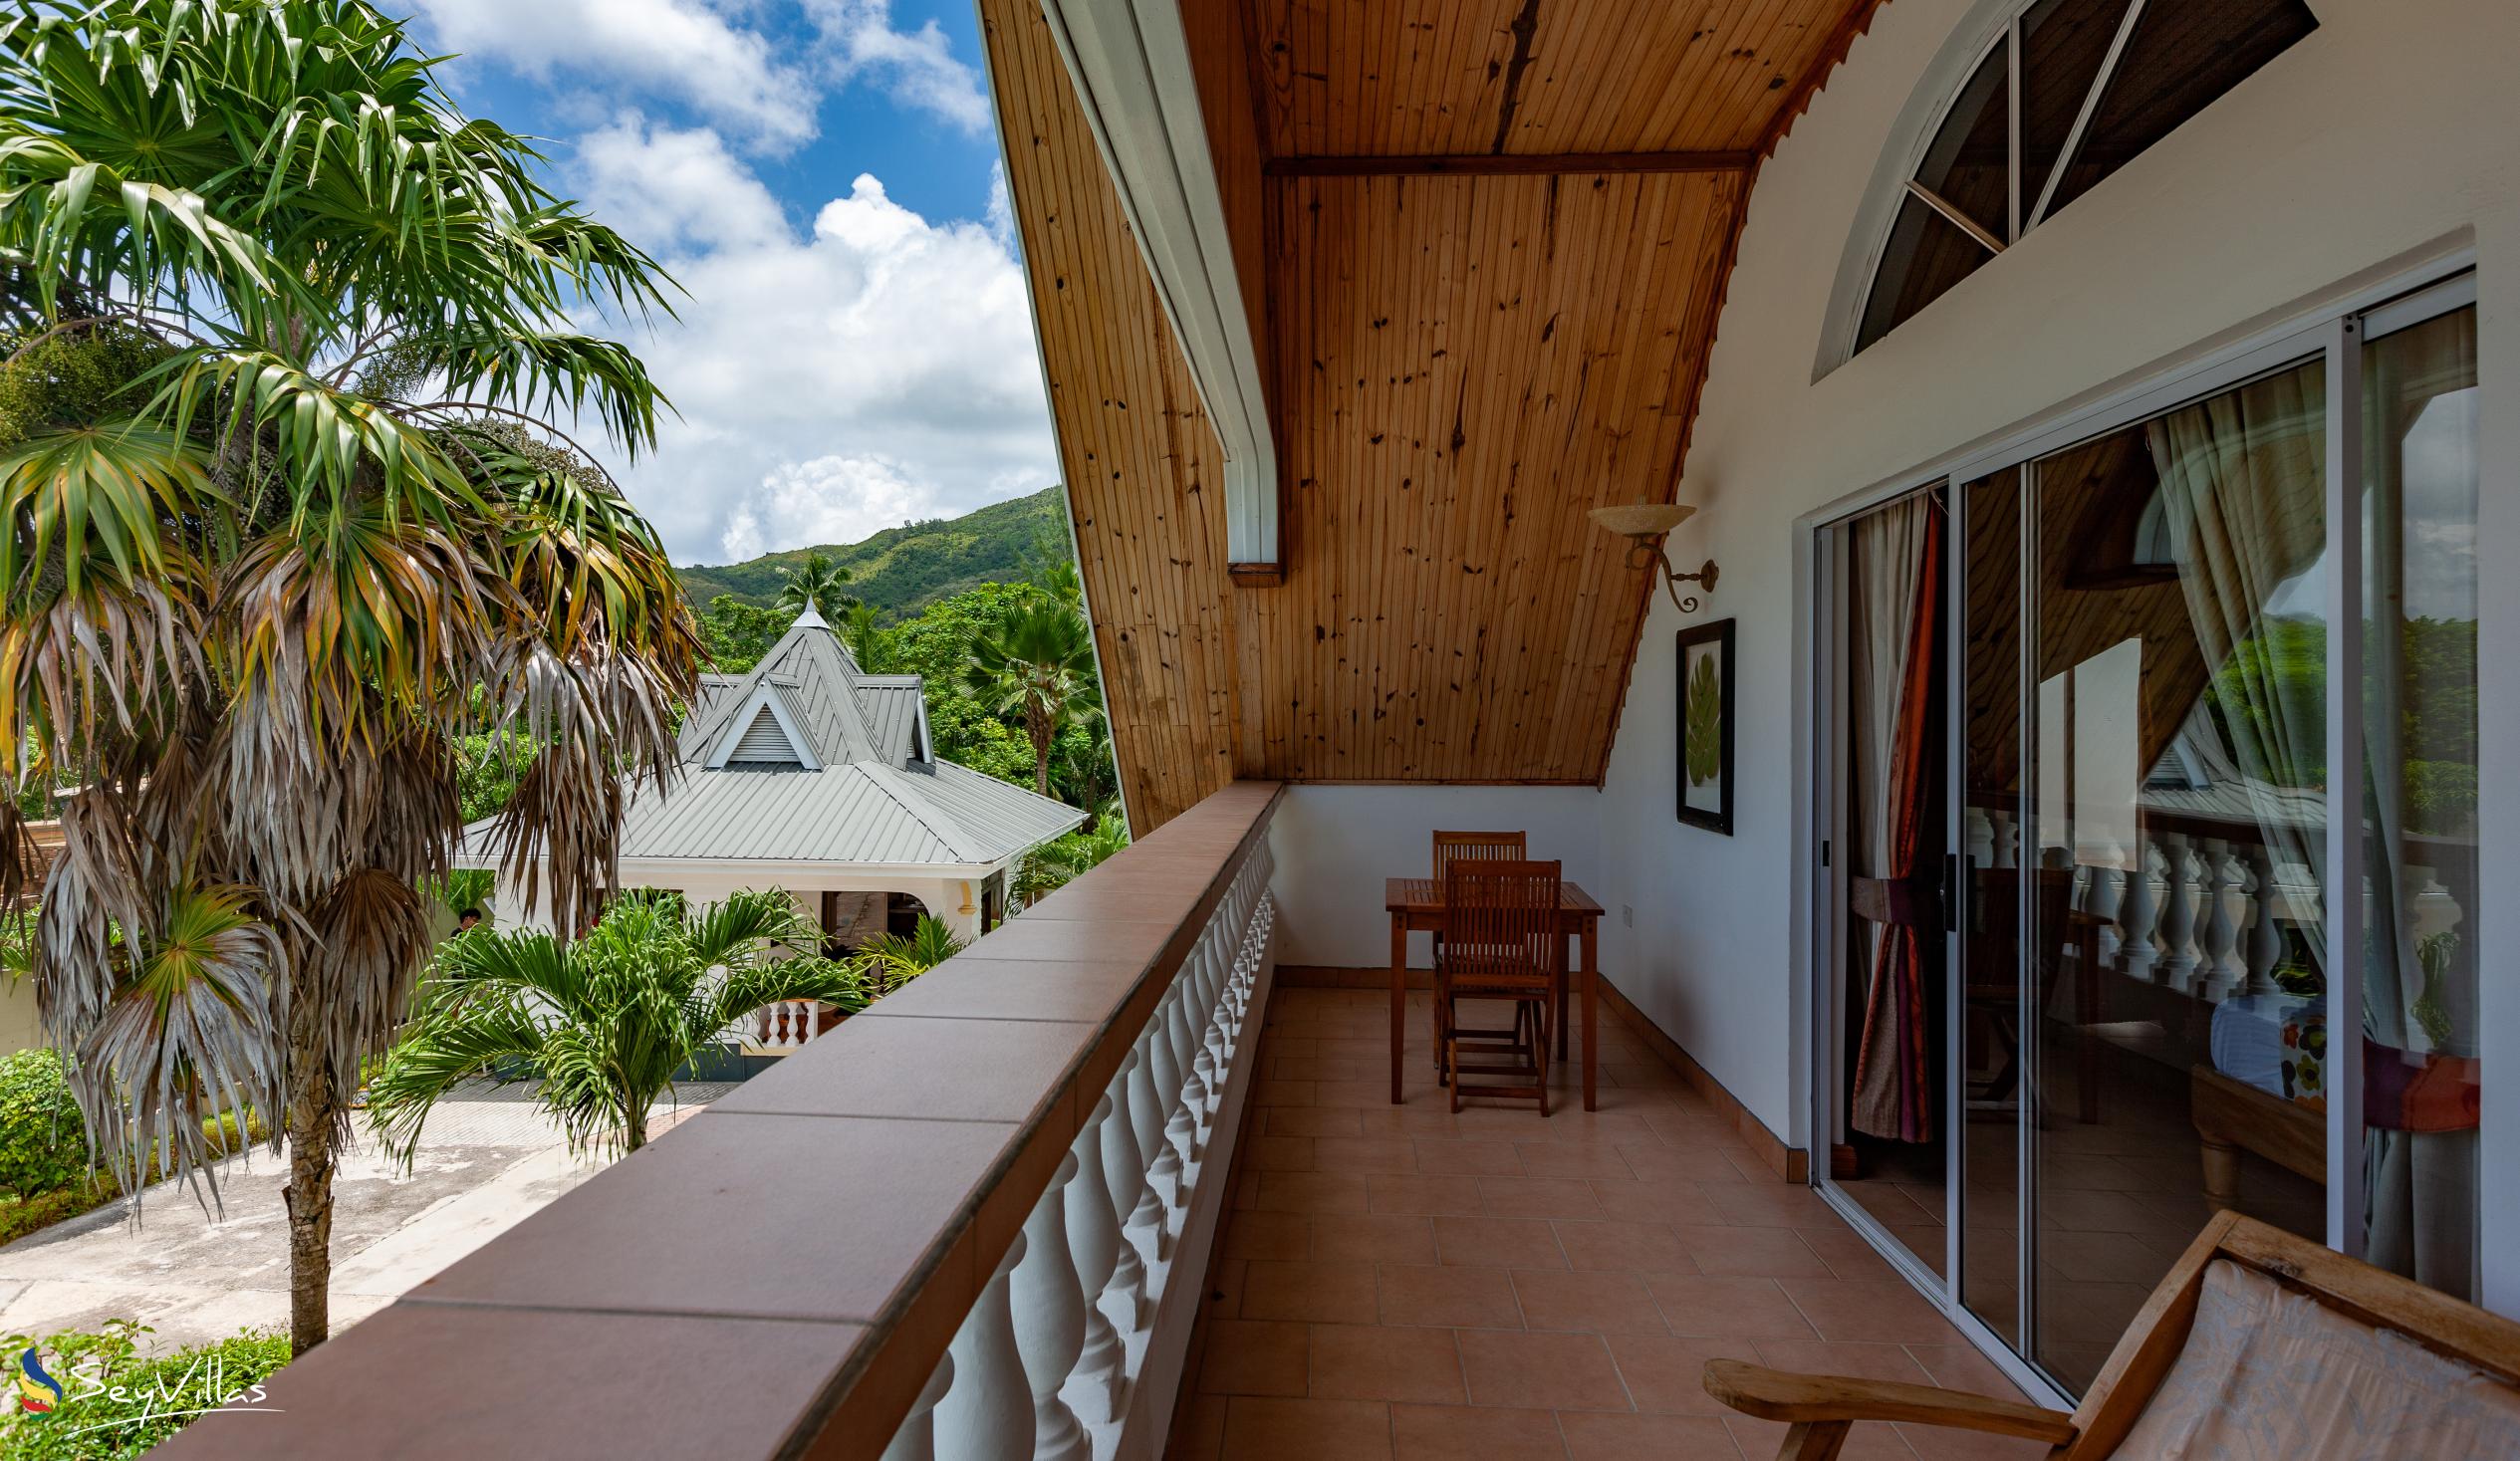 Photo 70: Villa Aya - Grand Villa - Praslin (Seychelles)